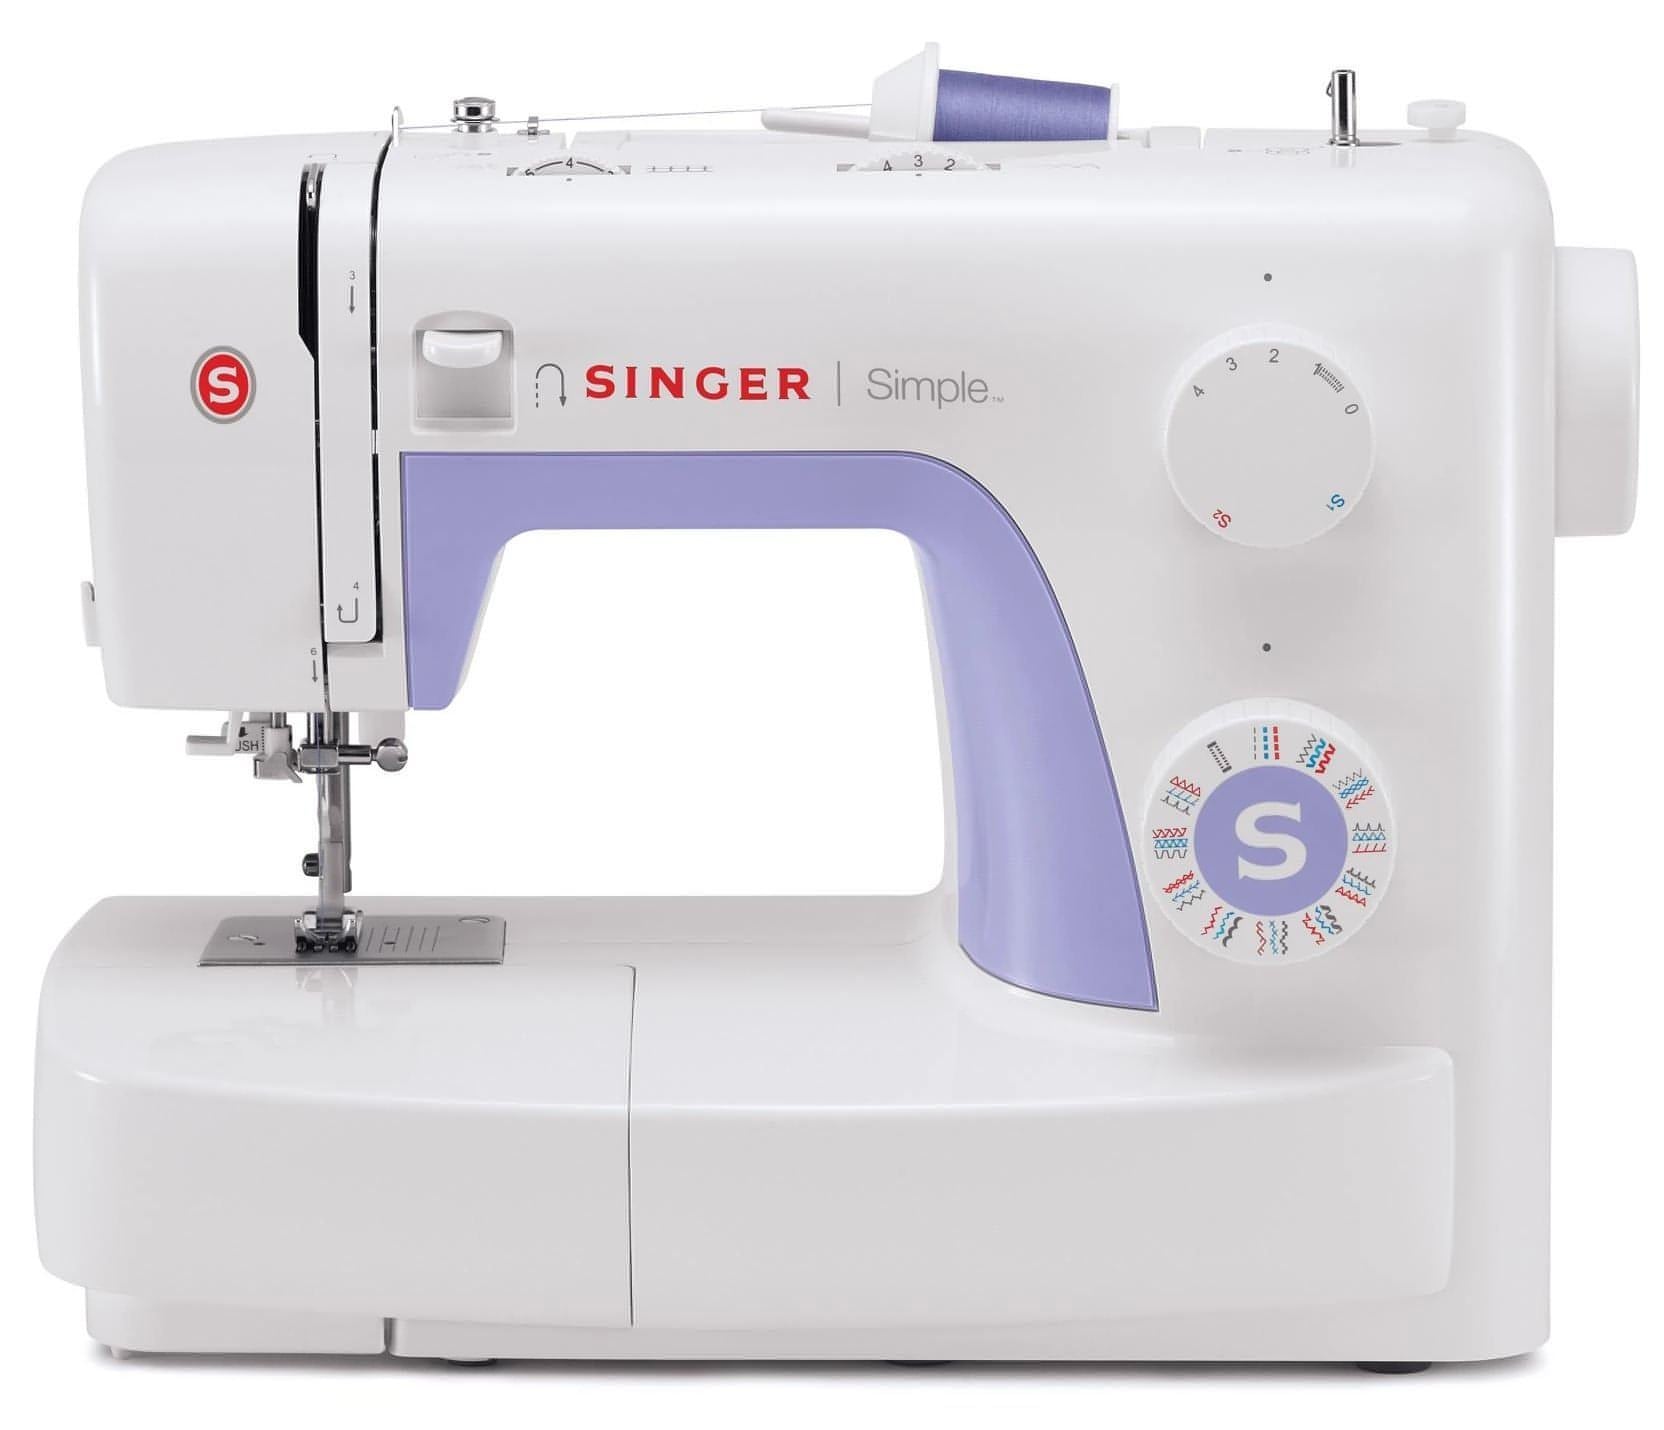 Singer Simple 3232 Sewing Machine - High spec 32 stitch patterns